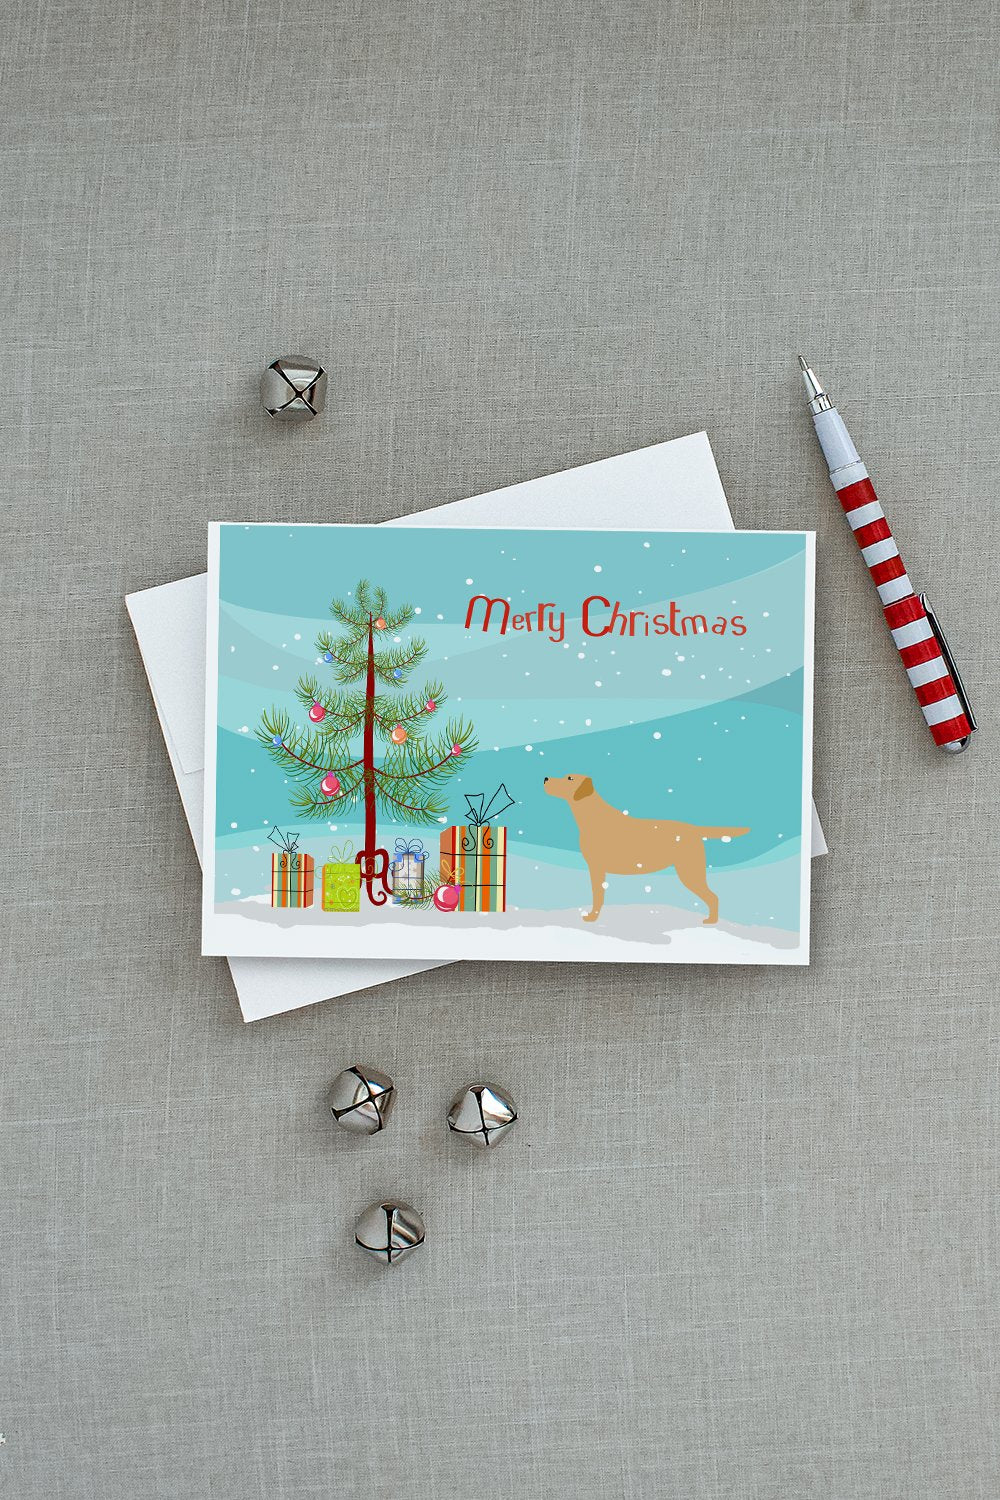 Yellow Labrador Retriever Merry Christmas Tree Greeting Cards and Envelopes Pack of 8 - the-store.com